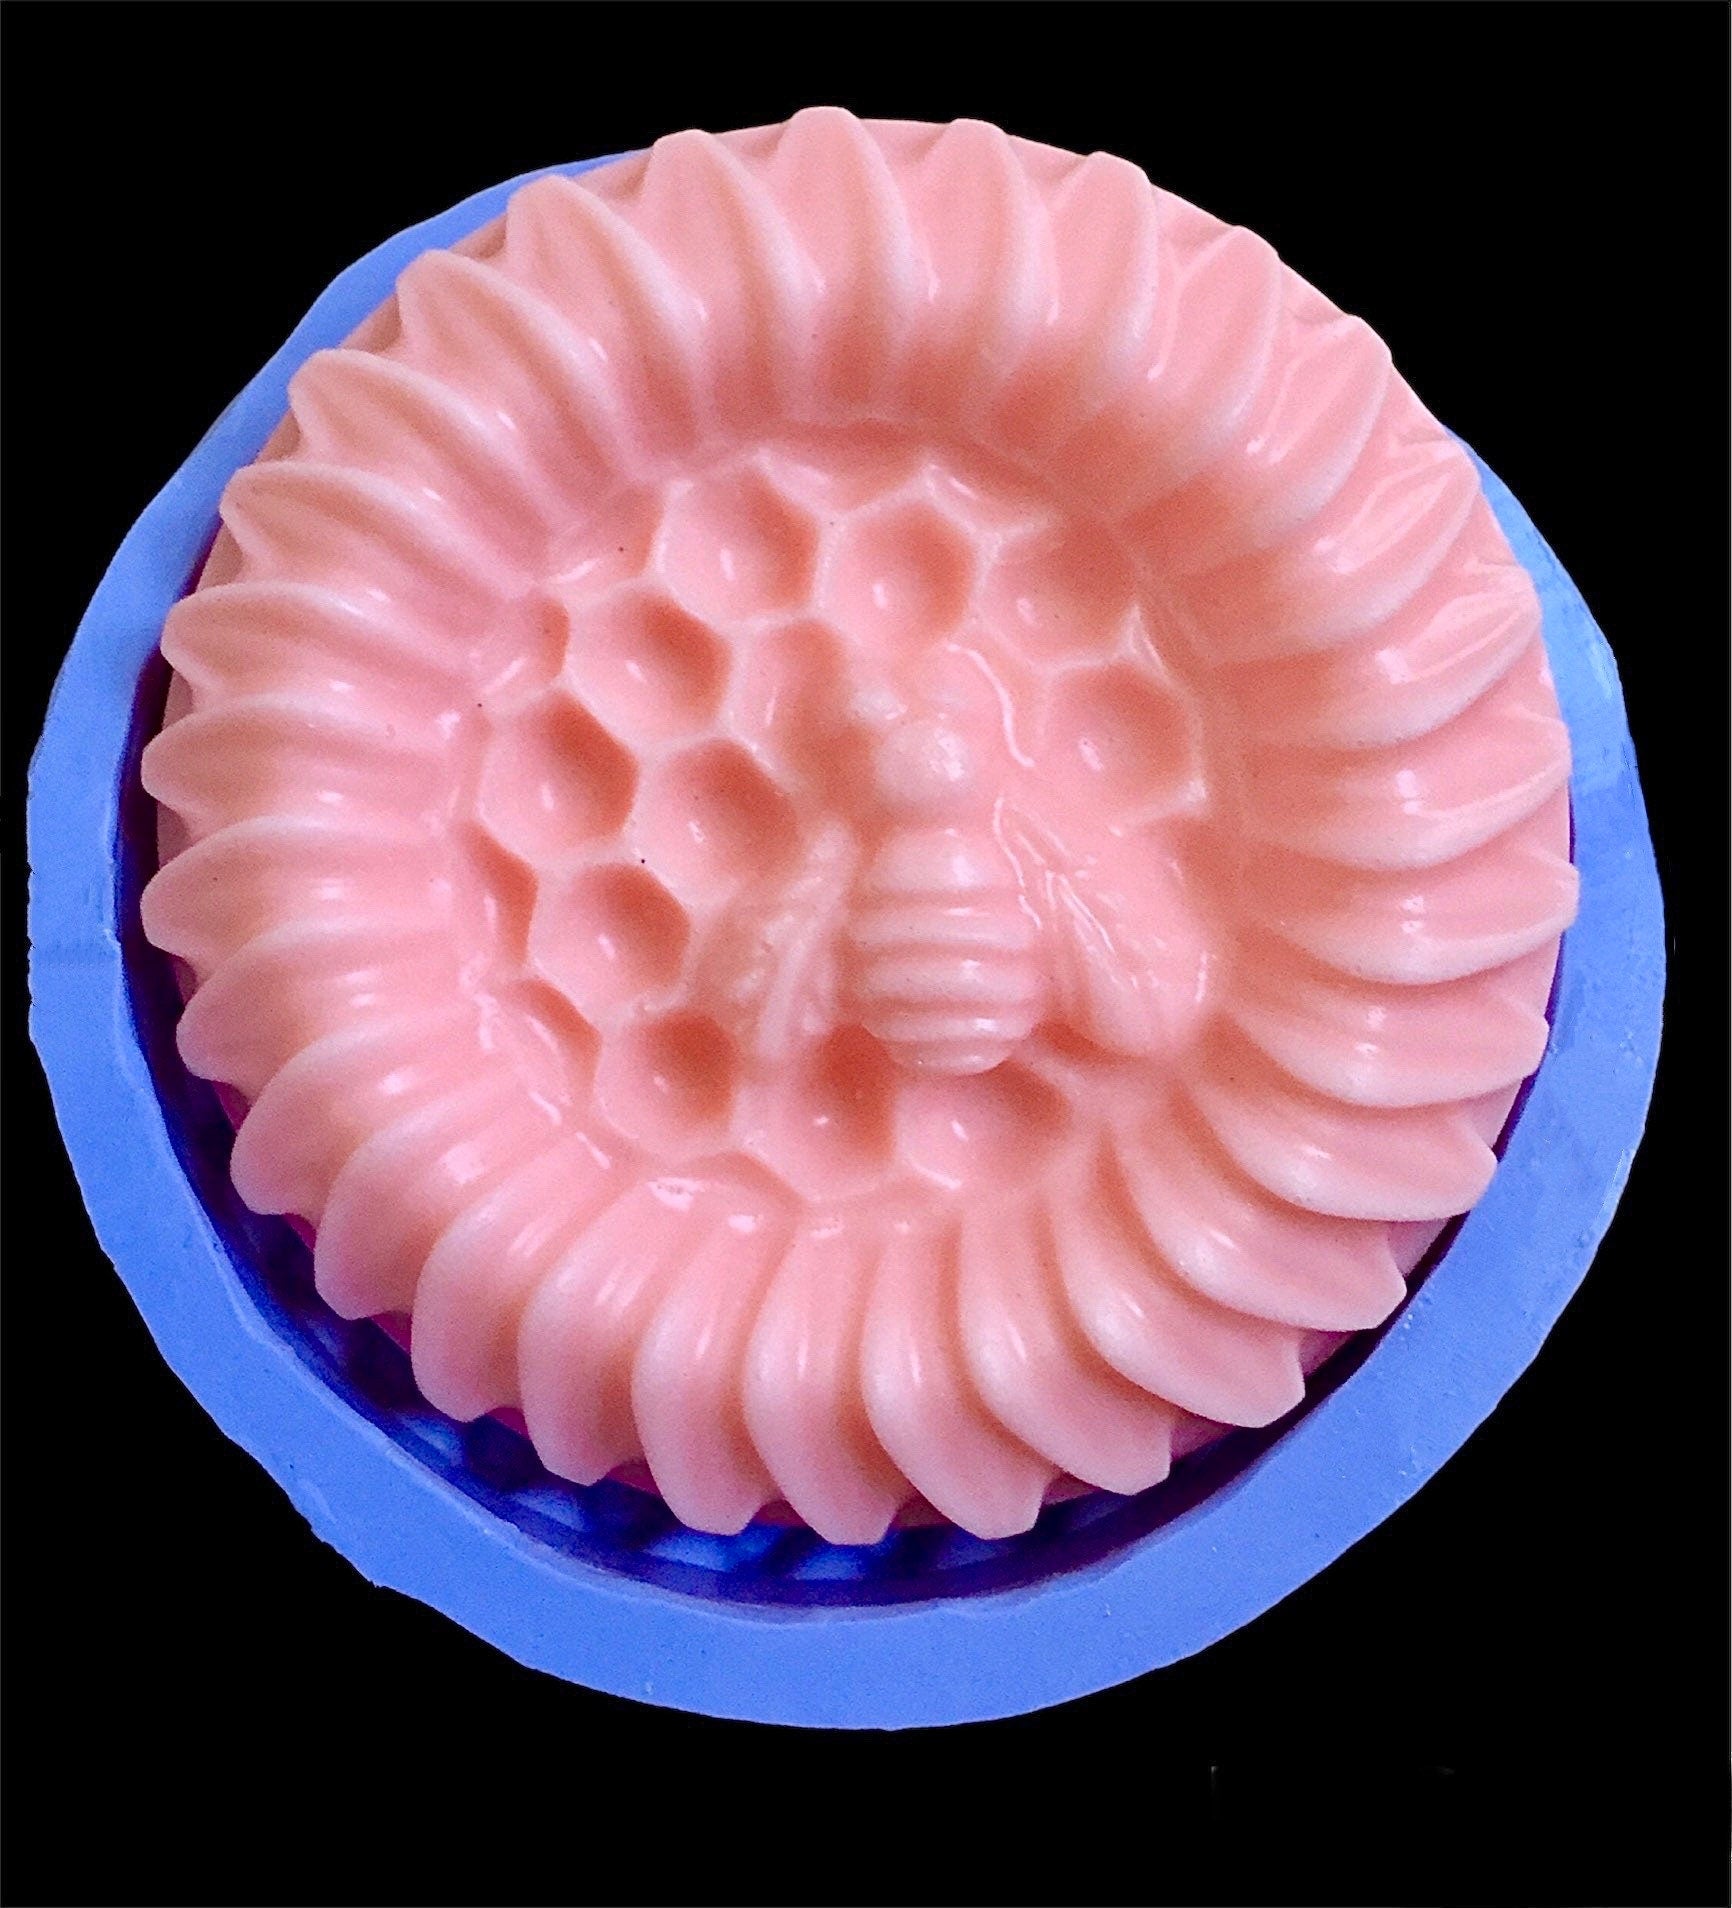 Silicone honeybee queen bee soap Mold - wax lotion bar mold